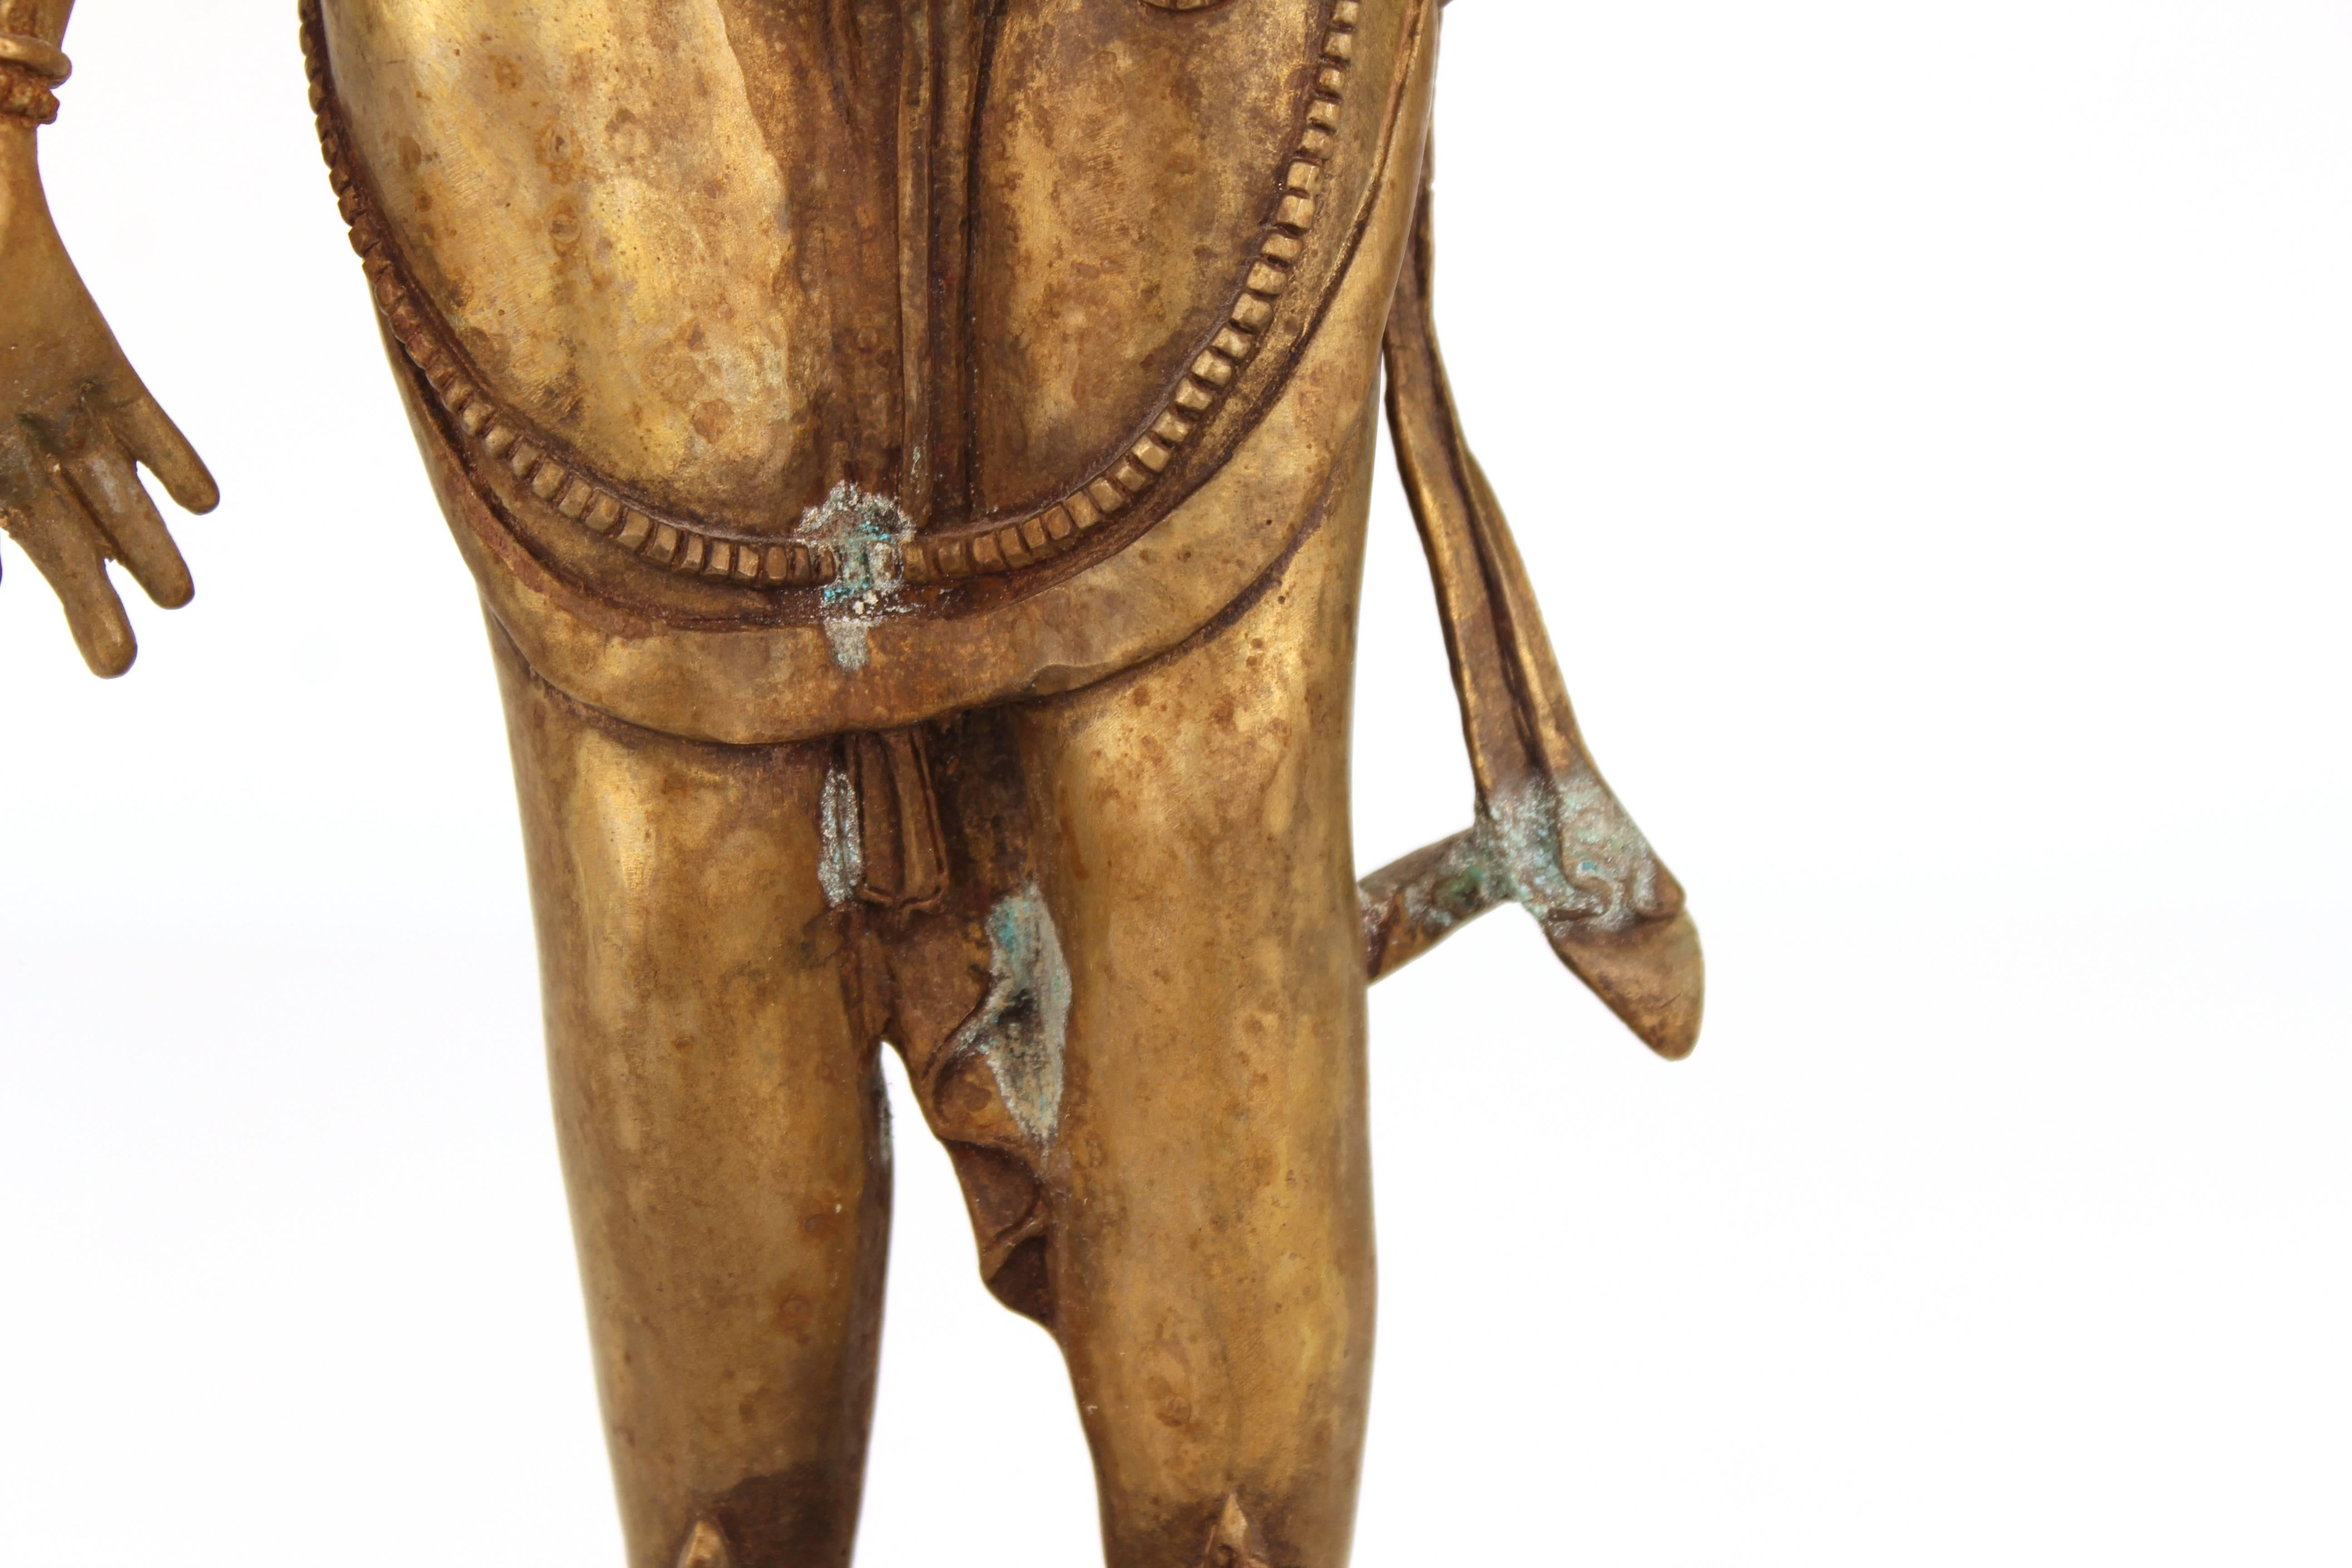 Tibetan or Indian Hindu Gilt Brass Figure of a Standing Bhumi Devi 4